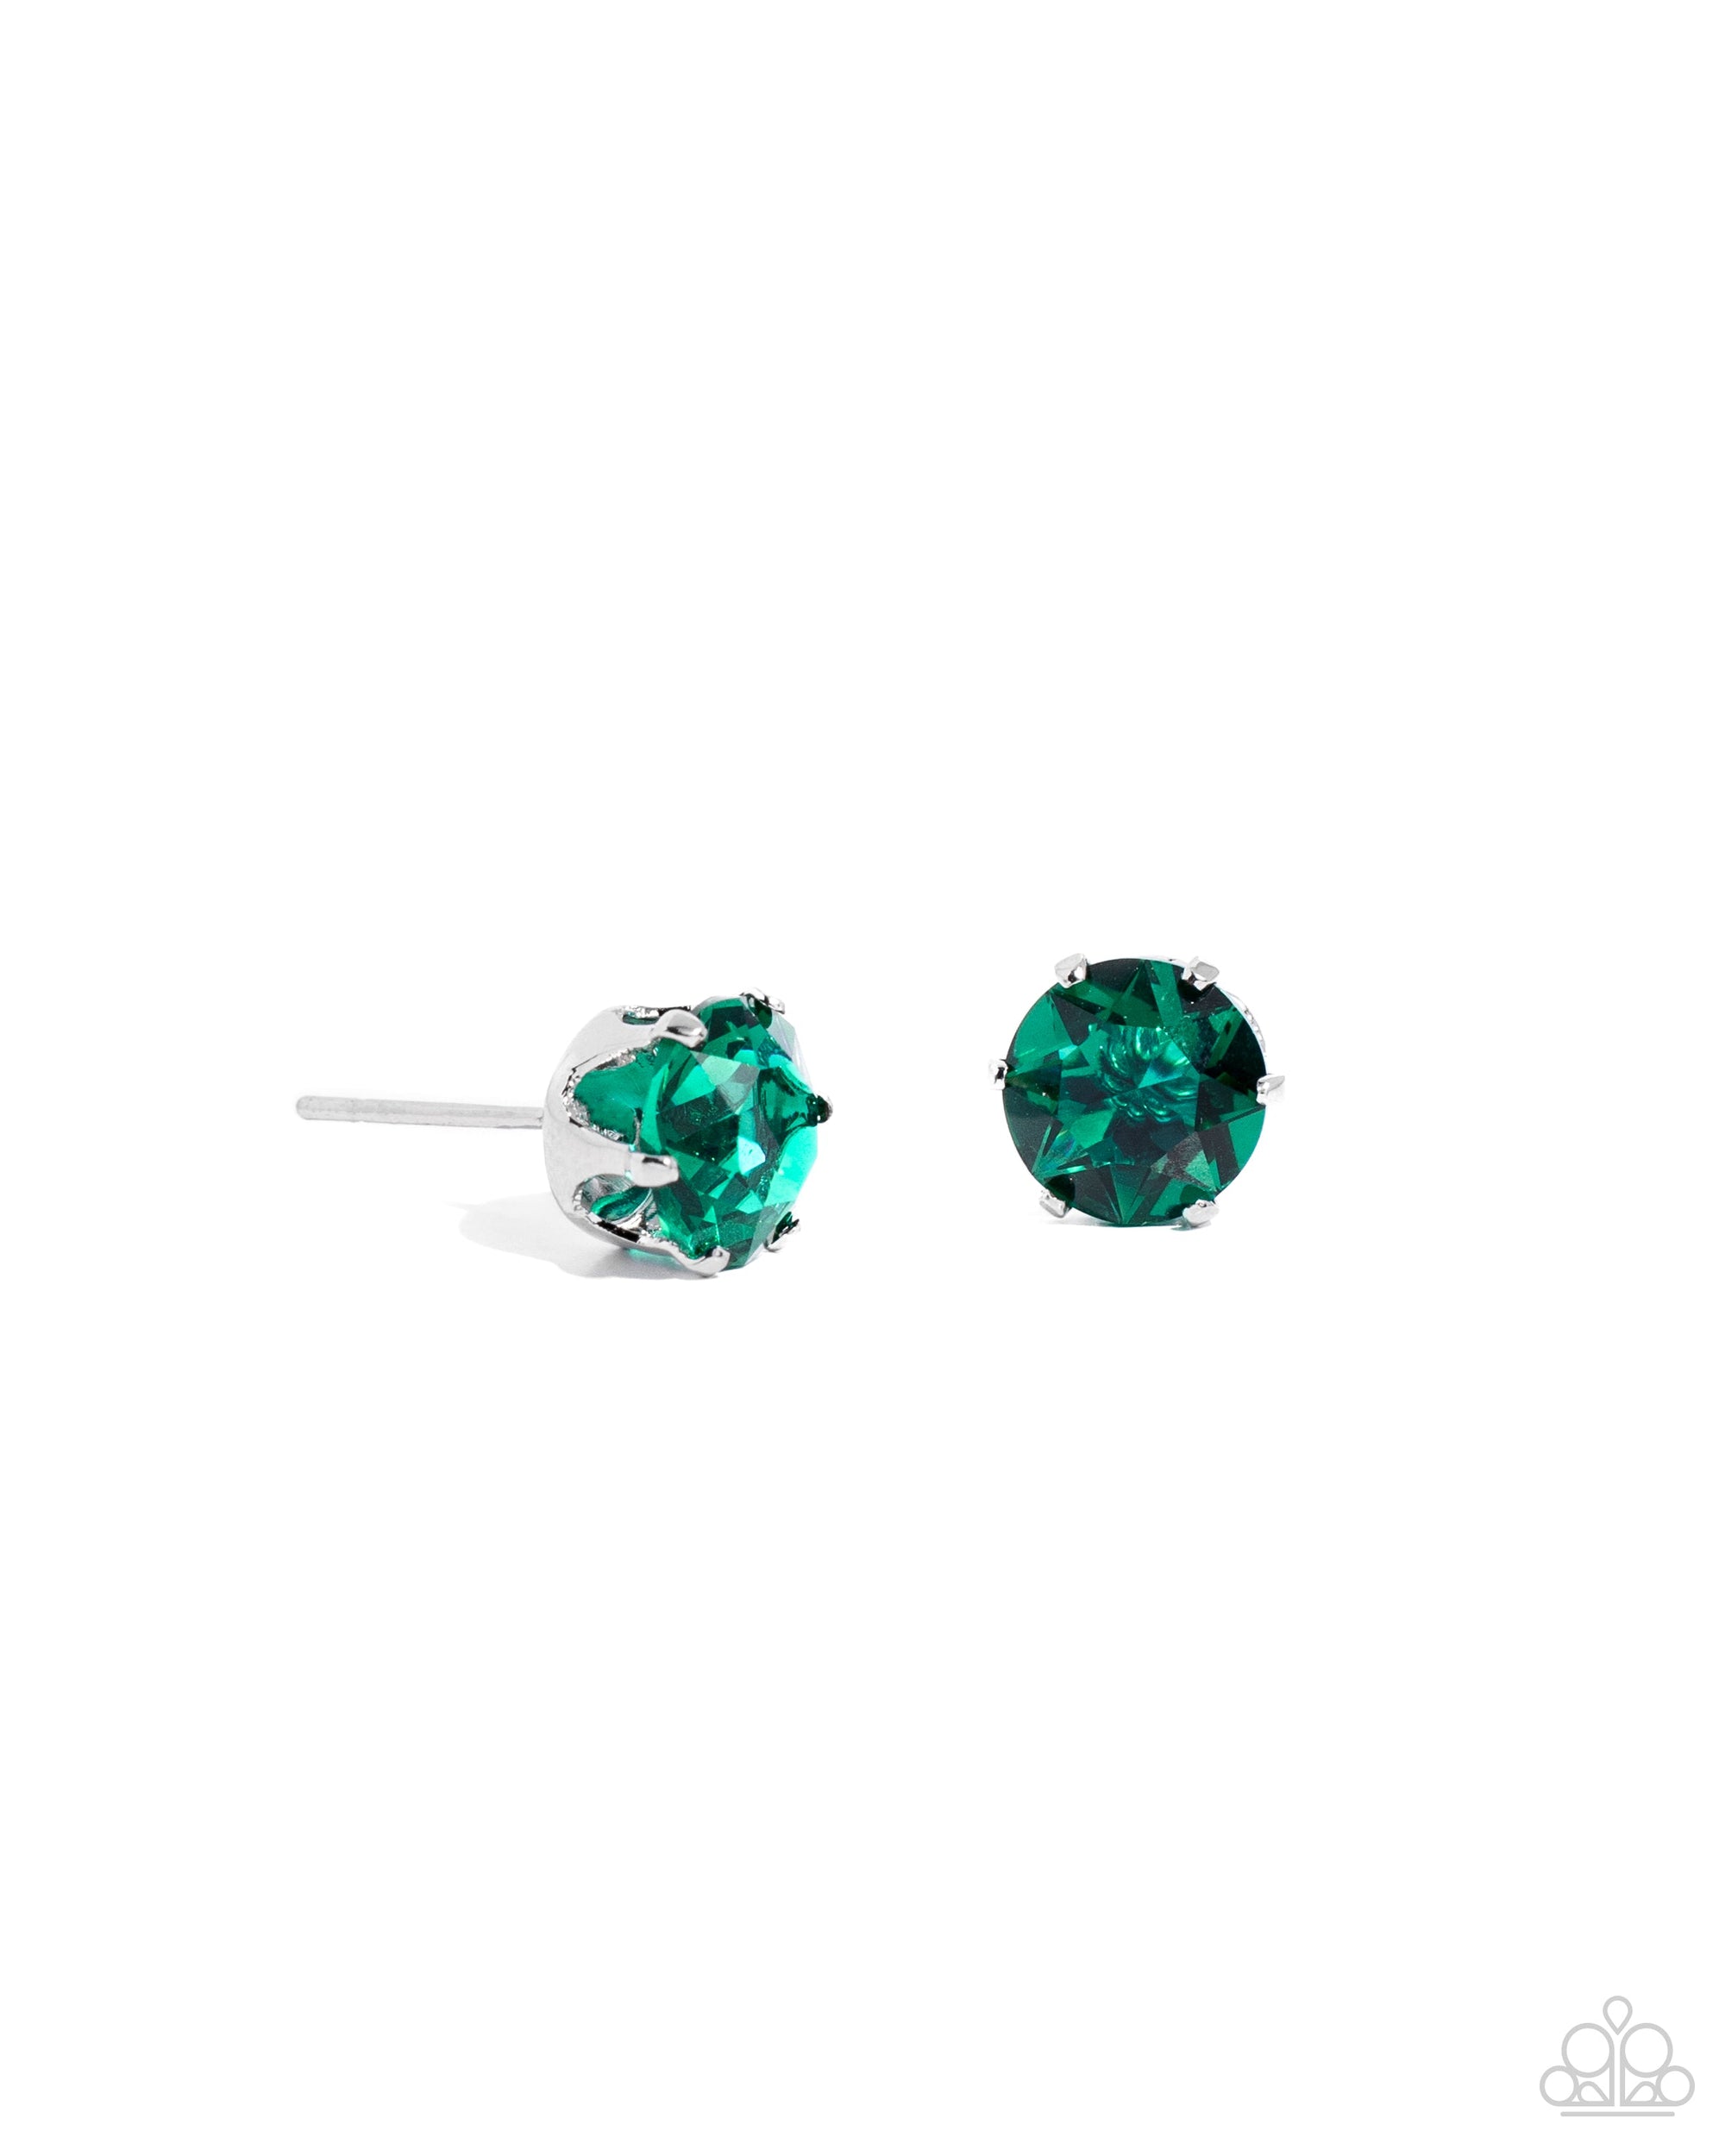 Breathtaking Birthstone (May) Emerald Green Rhinestone Earrings - Paparazzi Accessories- lightbox - CarasShop.com - $5 Jewelry by Cara Jewels